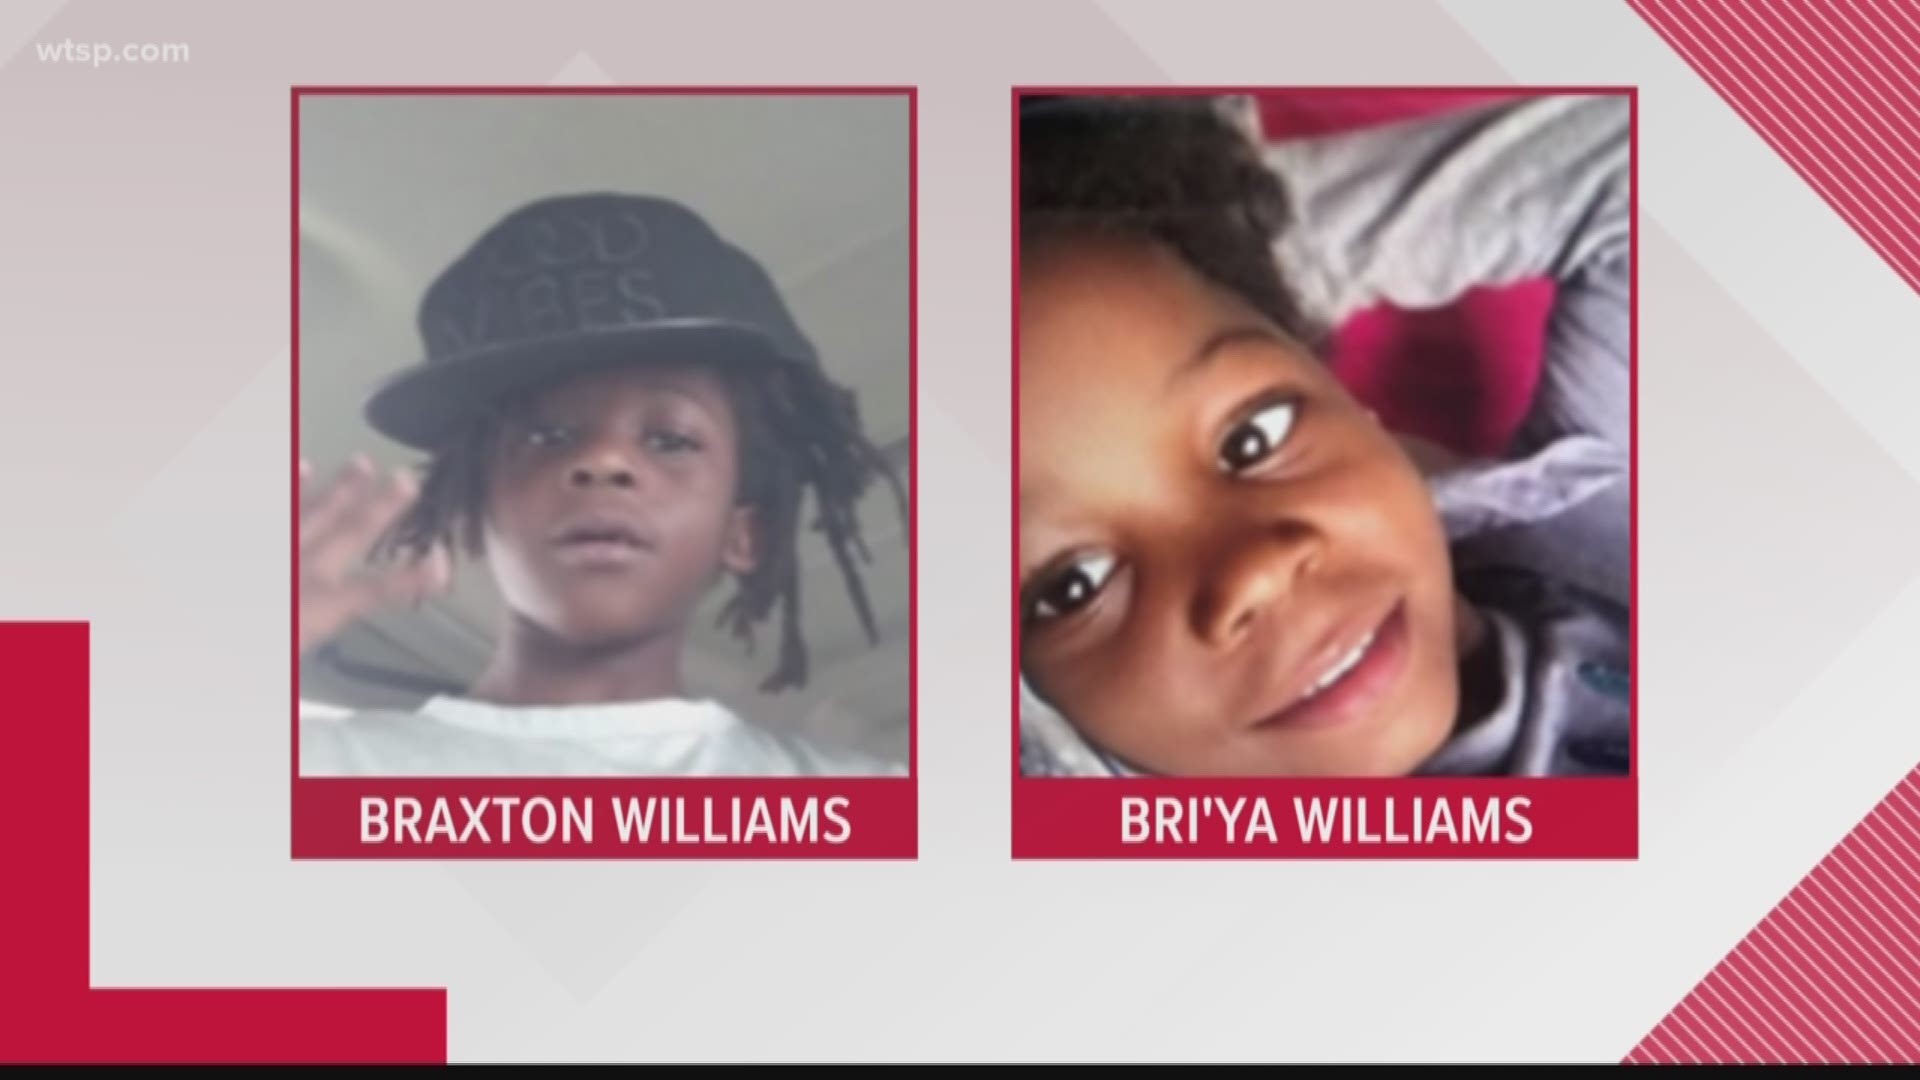 Braxton Williams and Bri'ya Williams last were seen in the Jacksonville area.